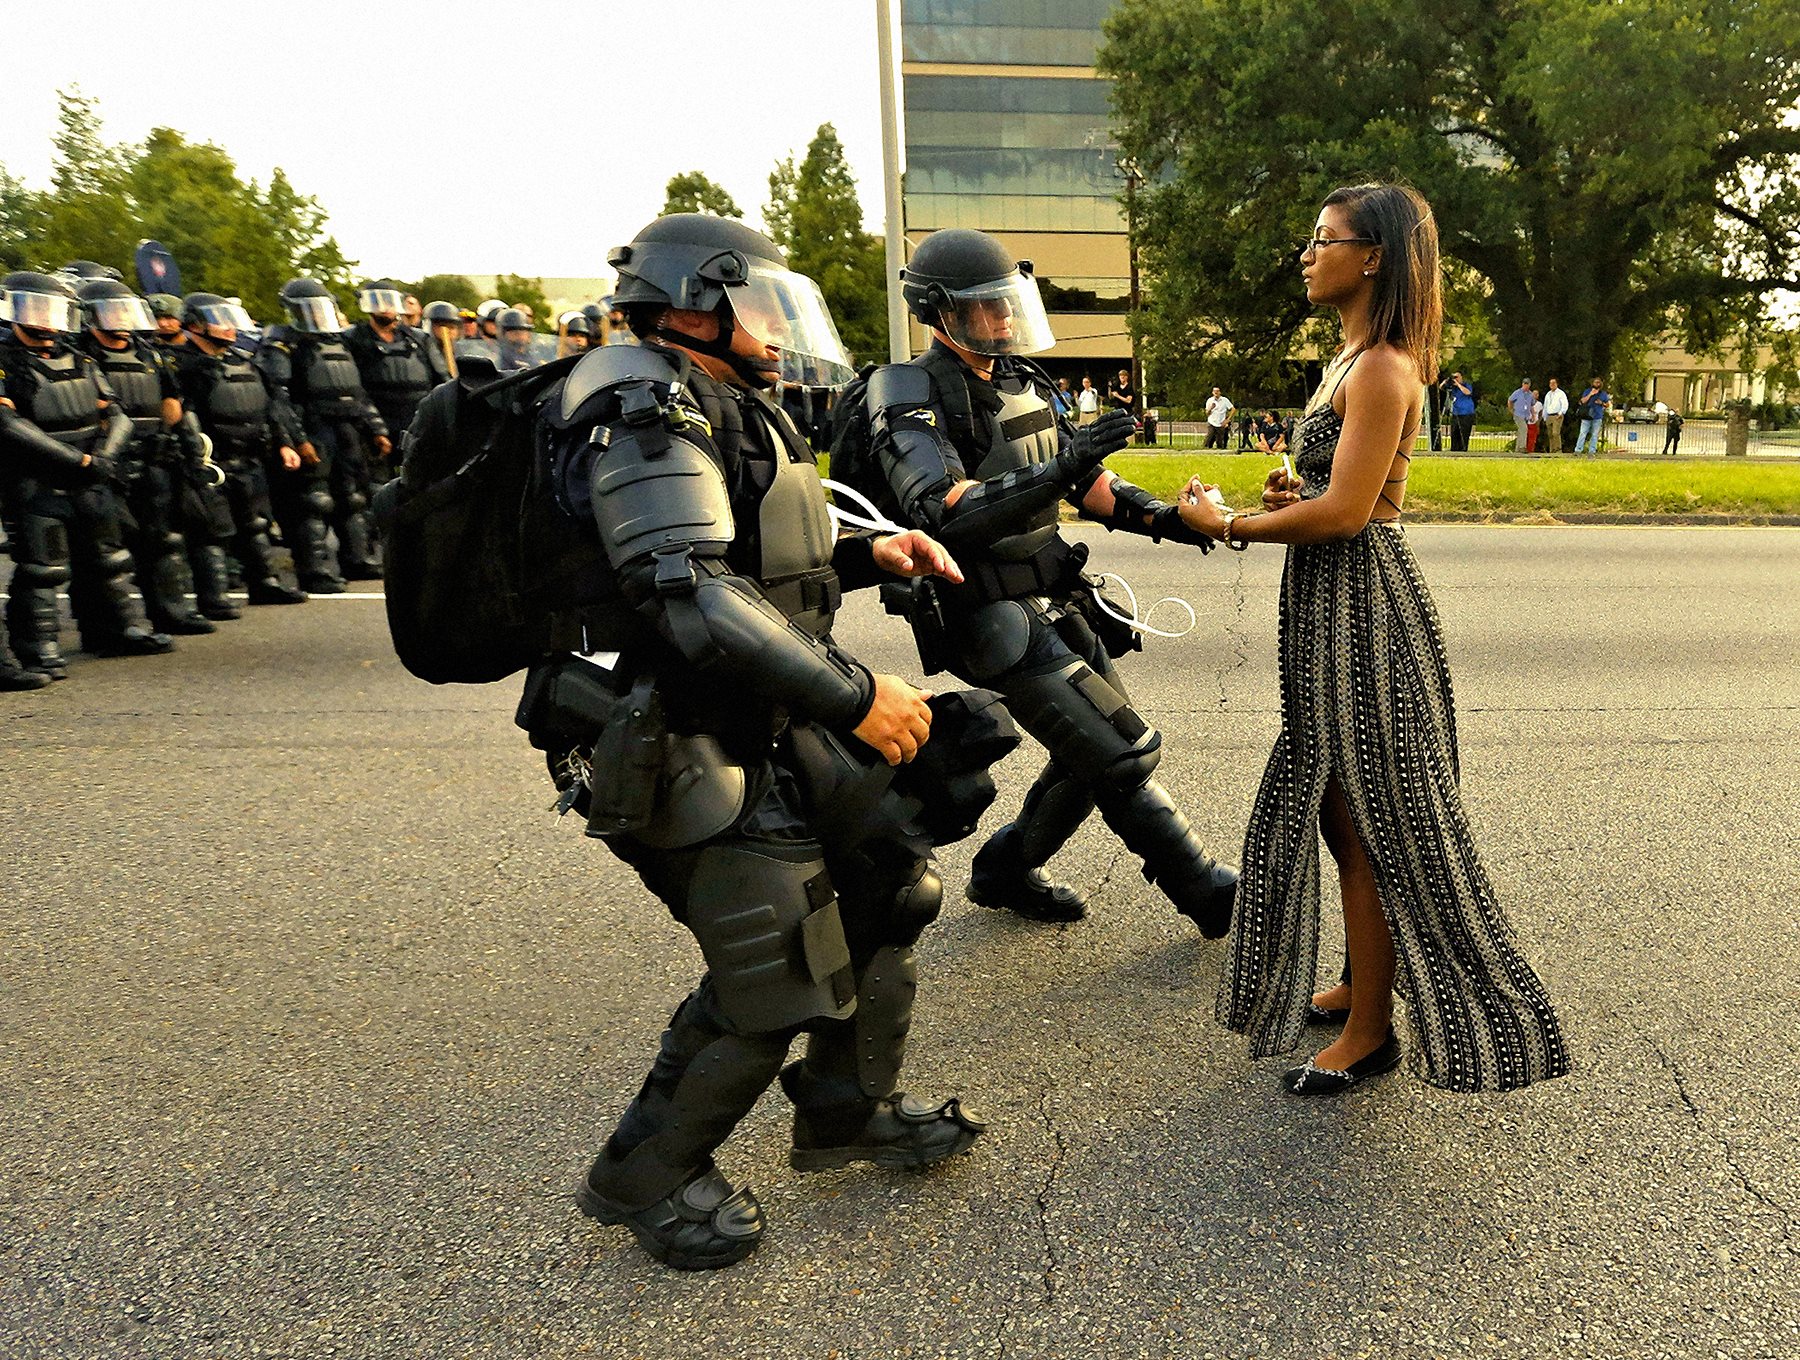 https://02varvara.files.wordpress.com/2016/07/00-baton-rouge-pd-police-arrest-protester-1207161.jpg?w=1800&h=1360